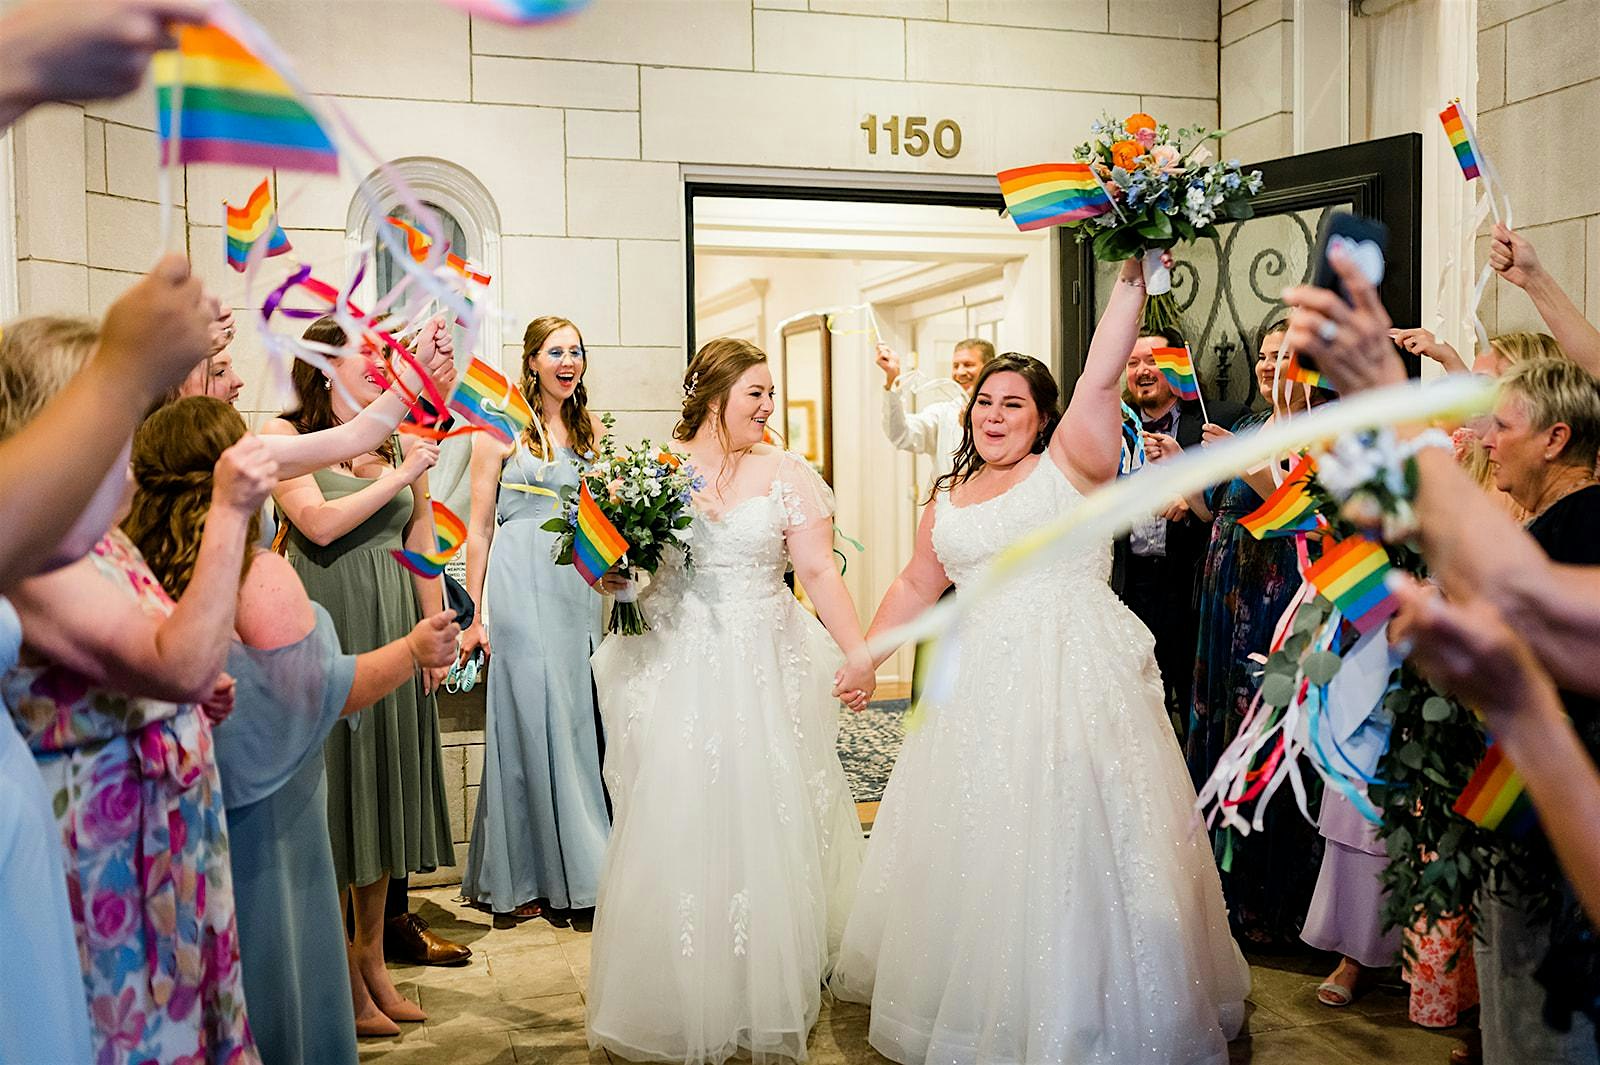 The Wimbish House Wedding Vendor Showcase - Celebrating Pride Month